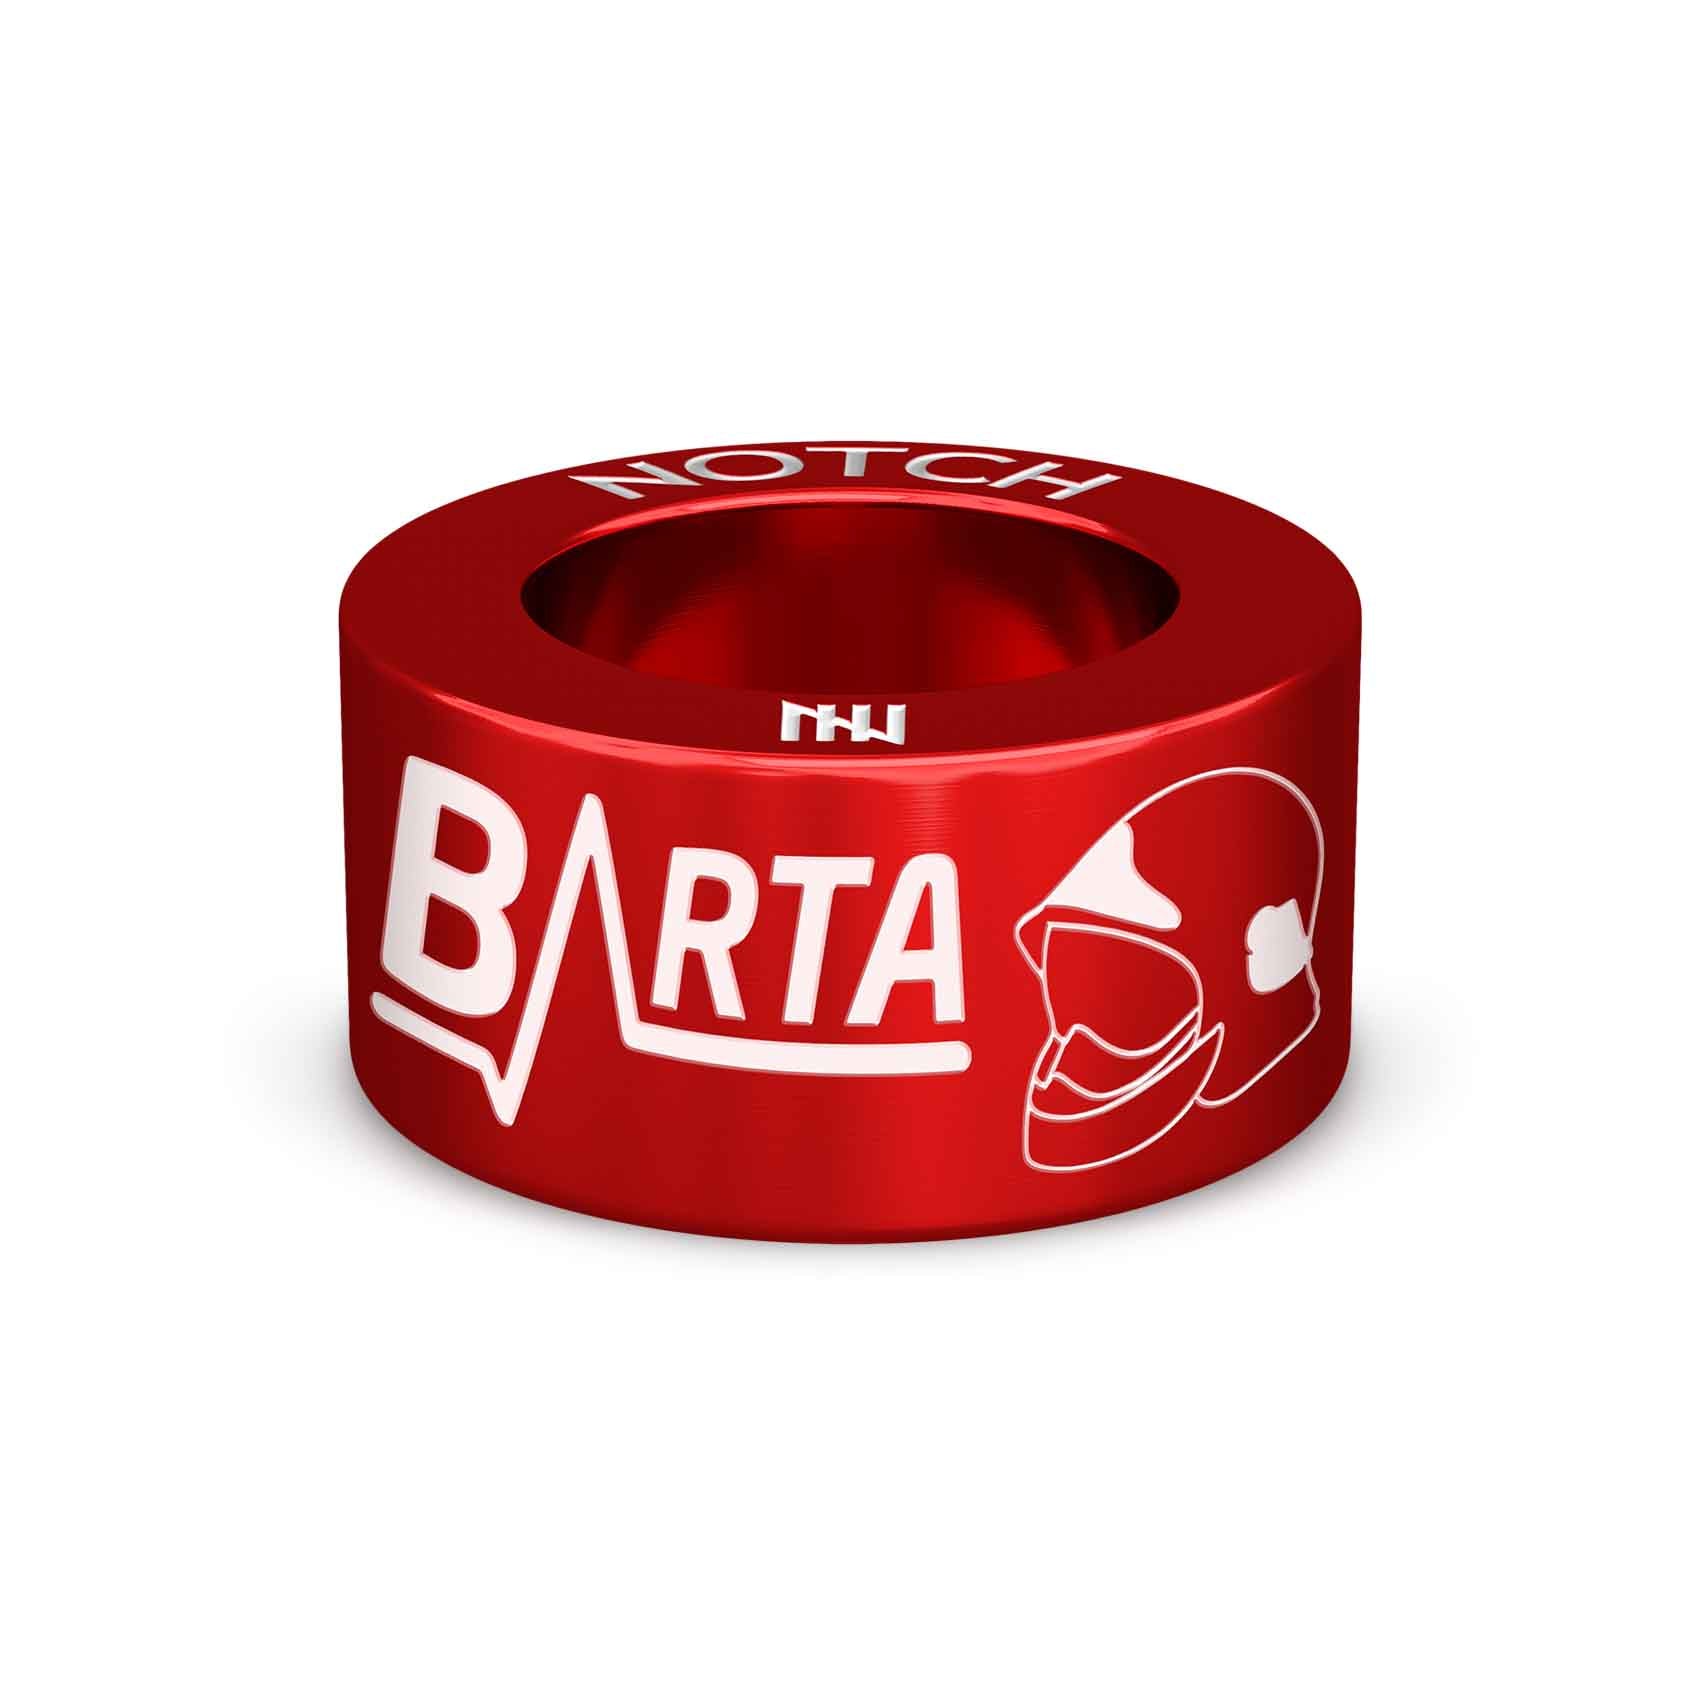 BARTA Firefighter's Helmet NOTCH Charm